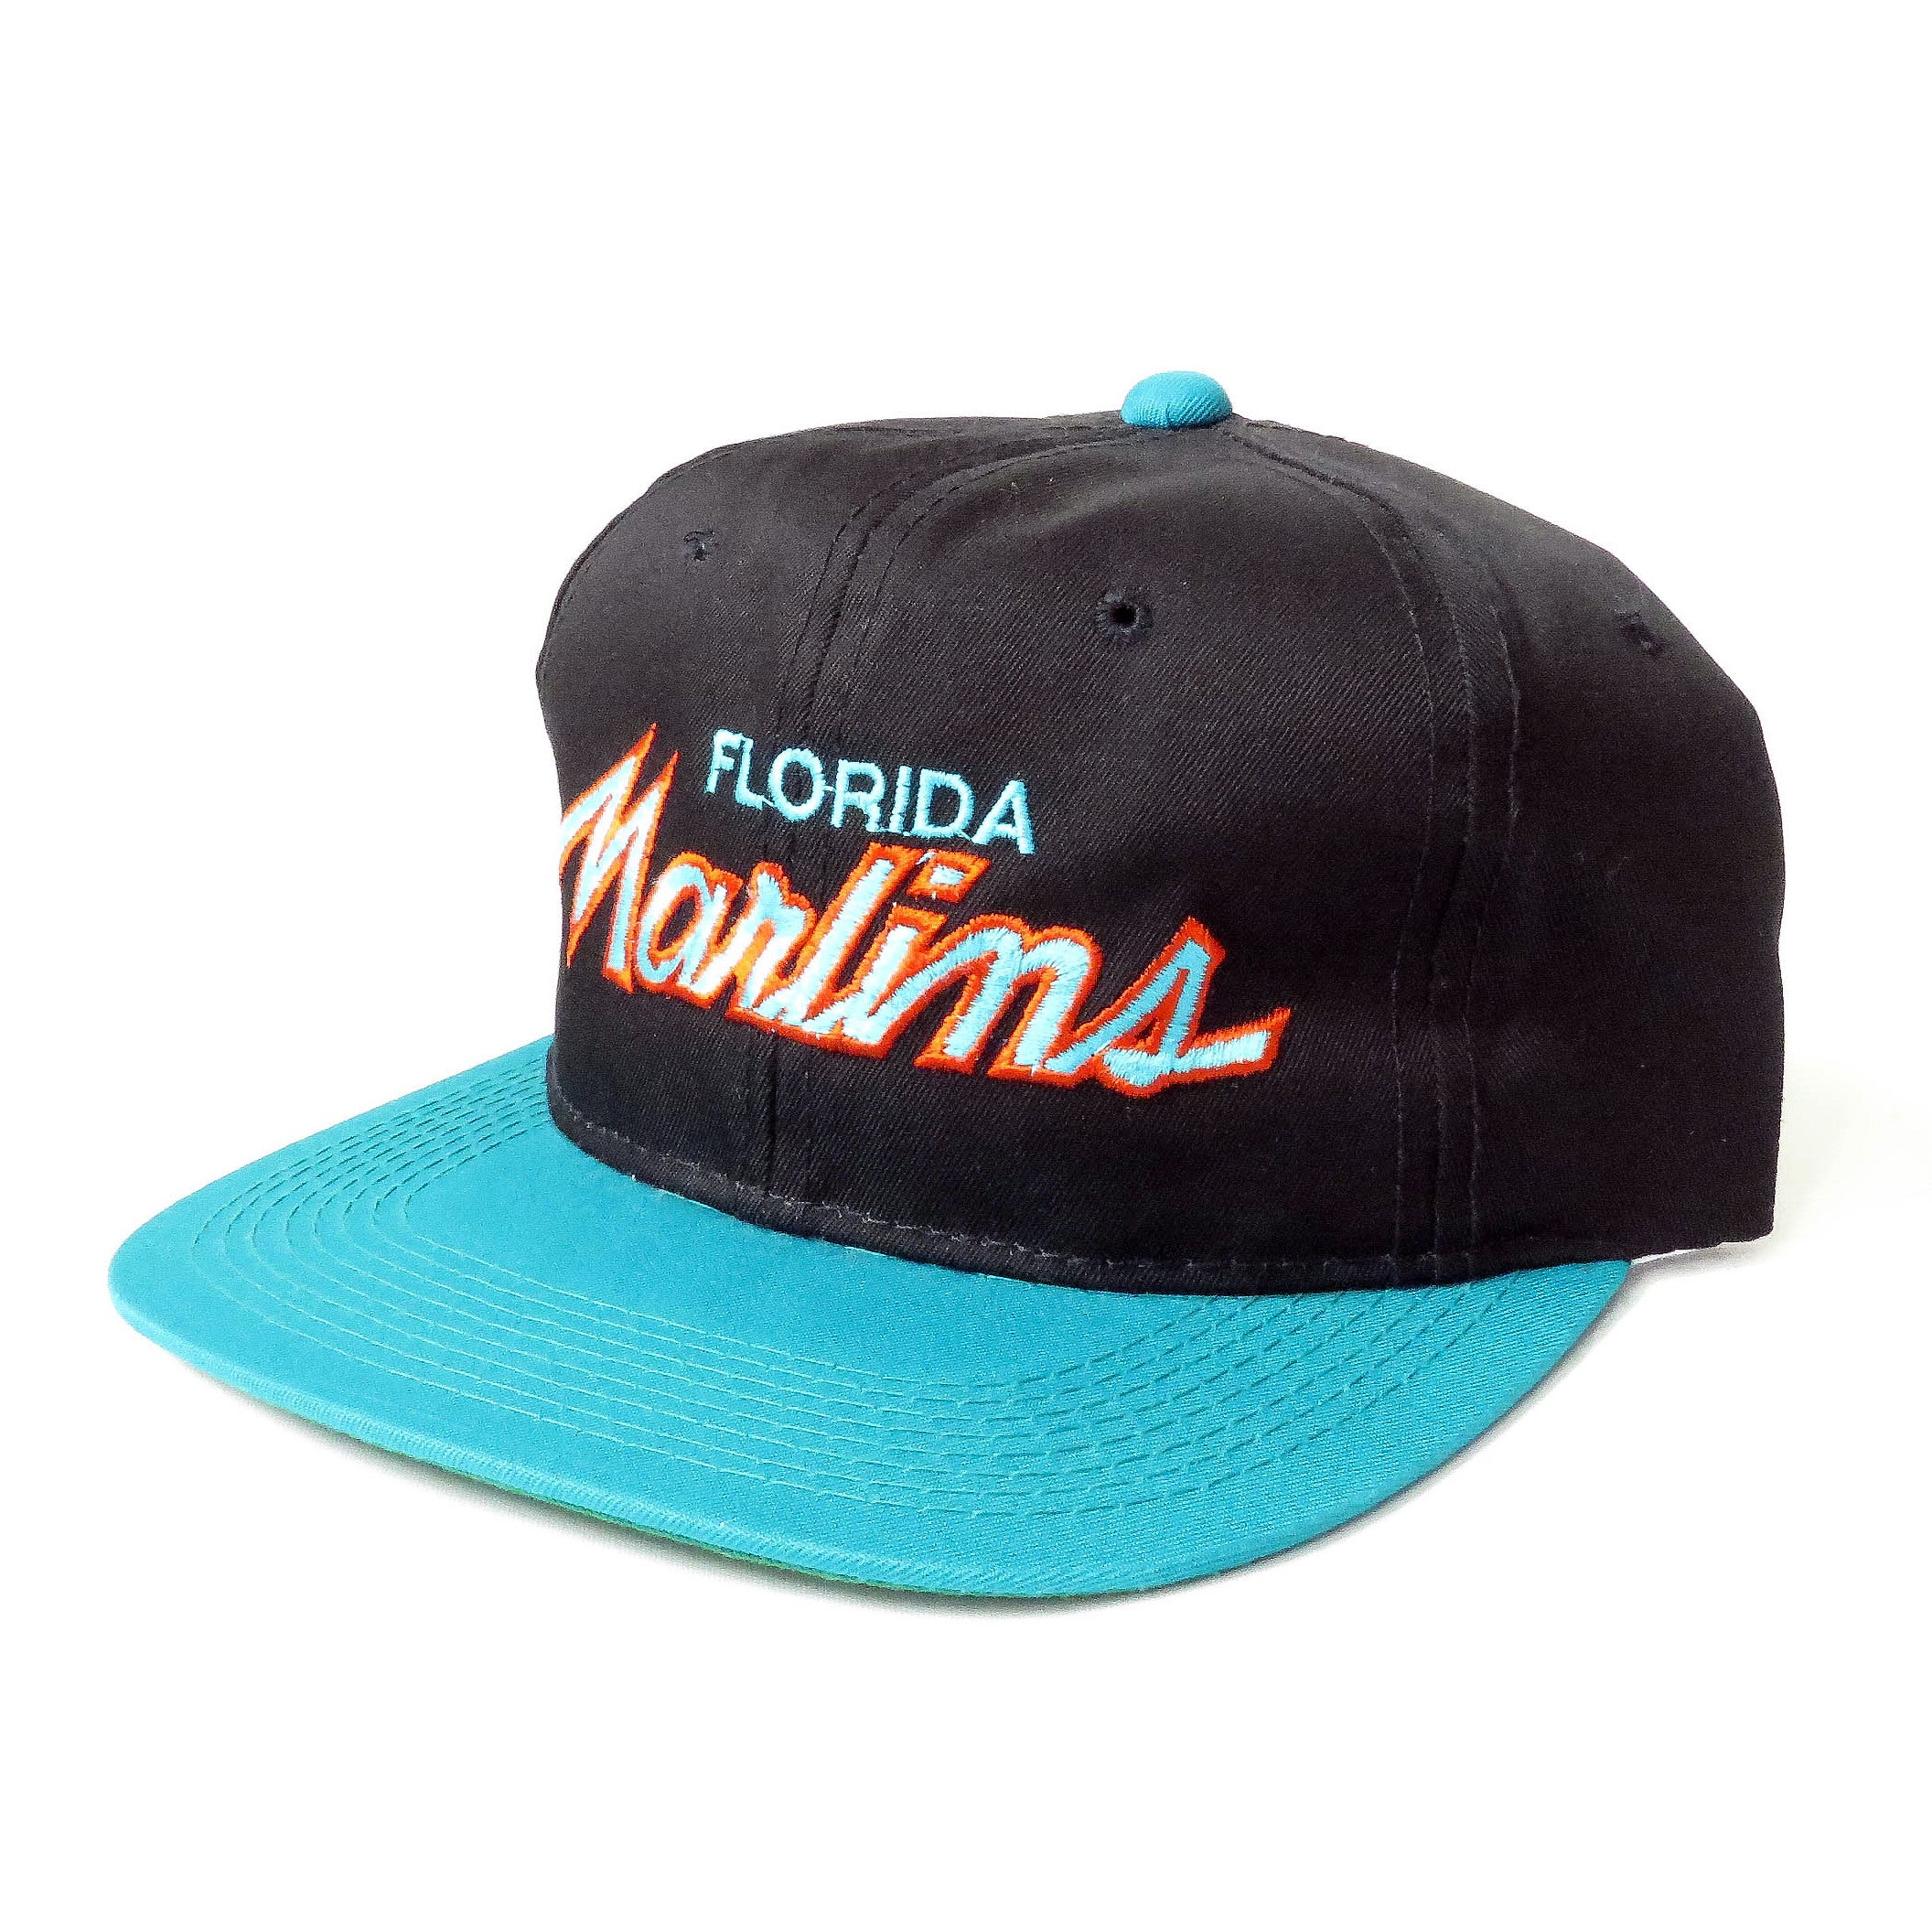 Vintage Florida Marlins Snapback Cap 90's NWT MLB Miami